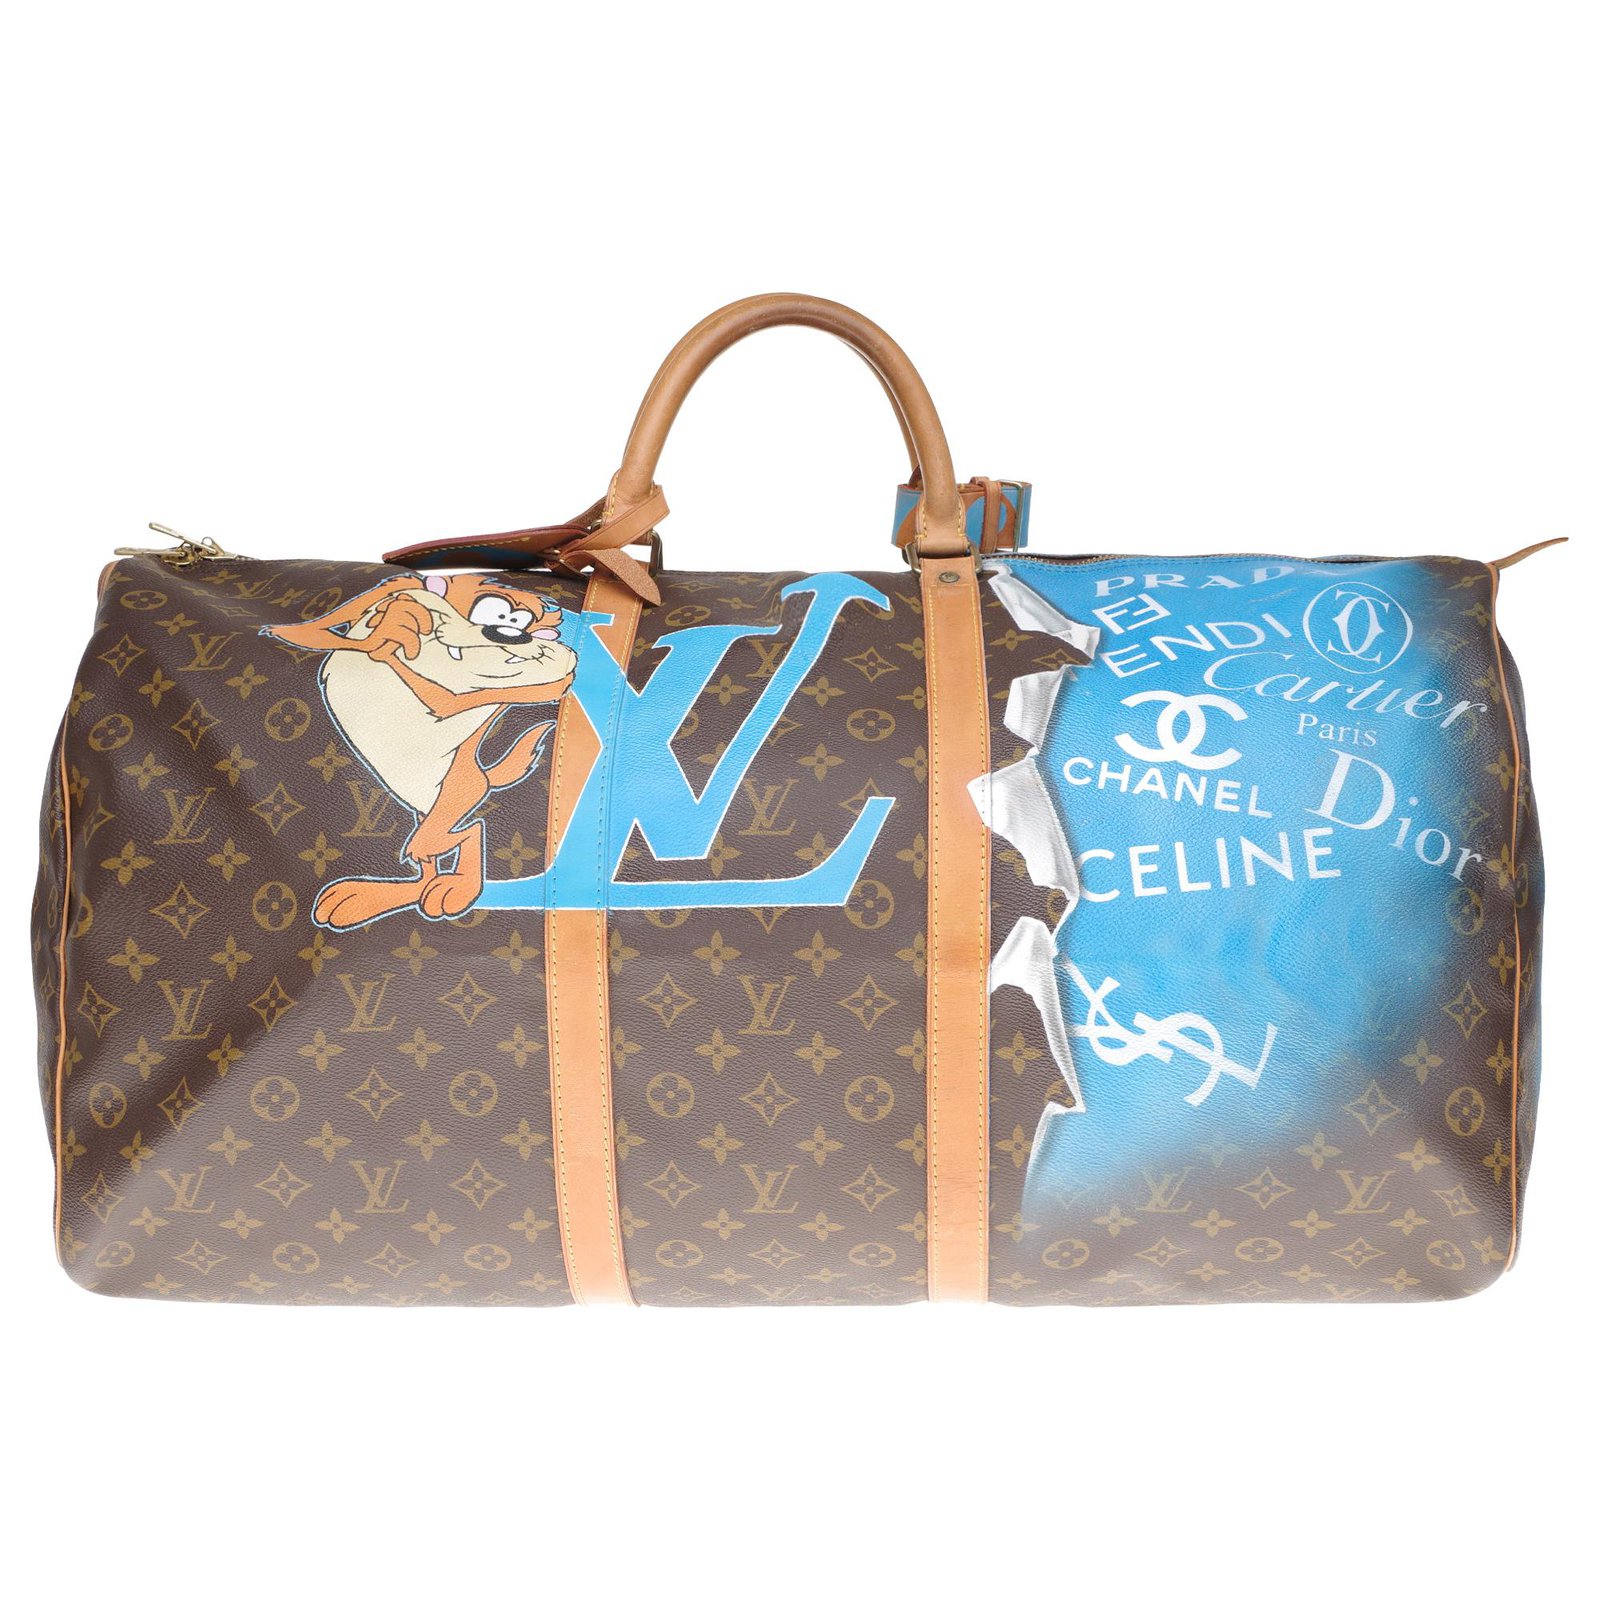 LOUIS VUITTON. Travel bag, Keepall model, monogrammed …